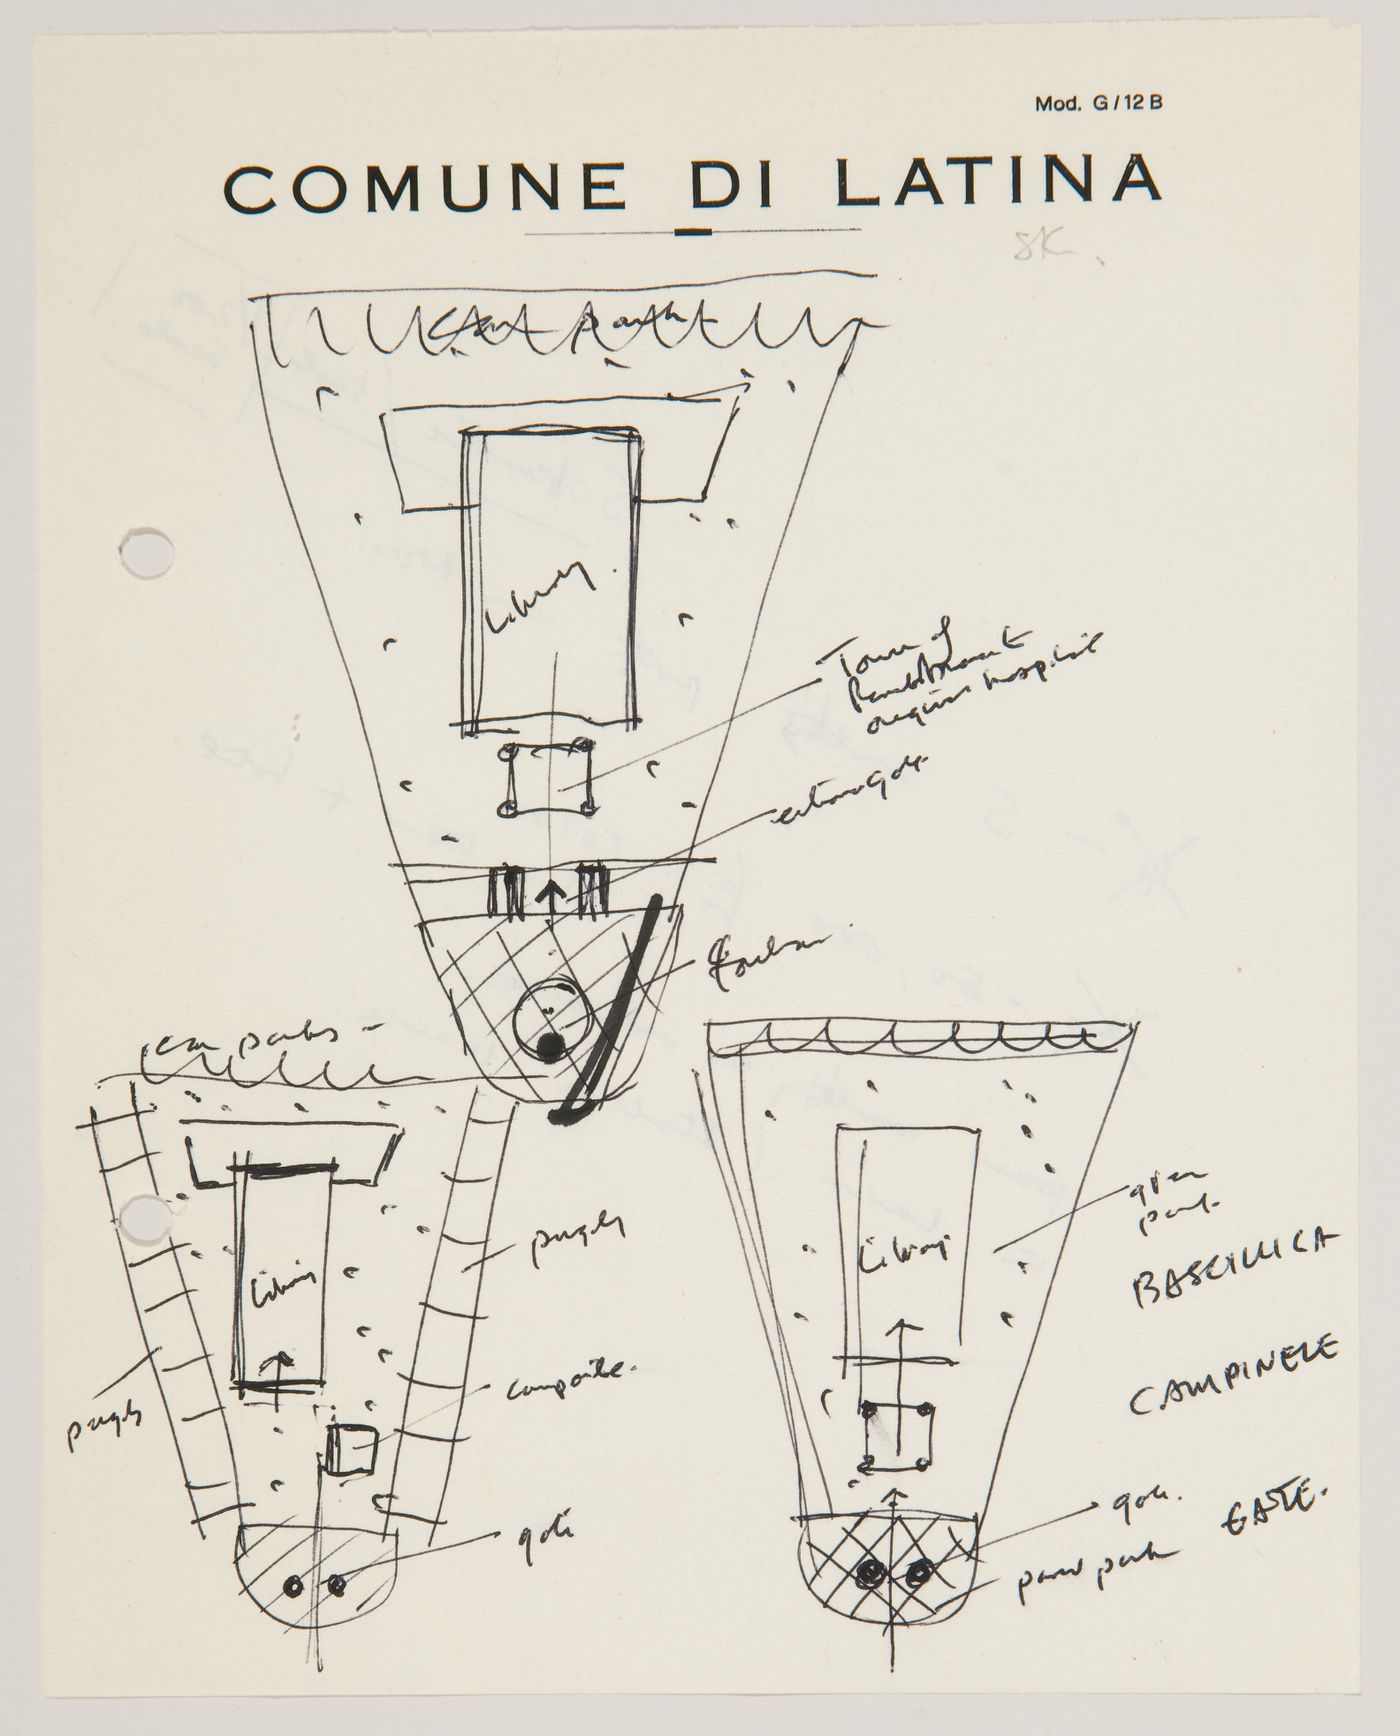 Biblioteca pubblica, Latina, Italy: plans